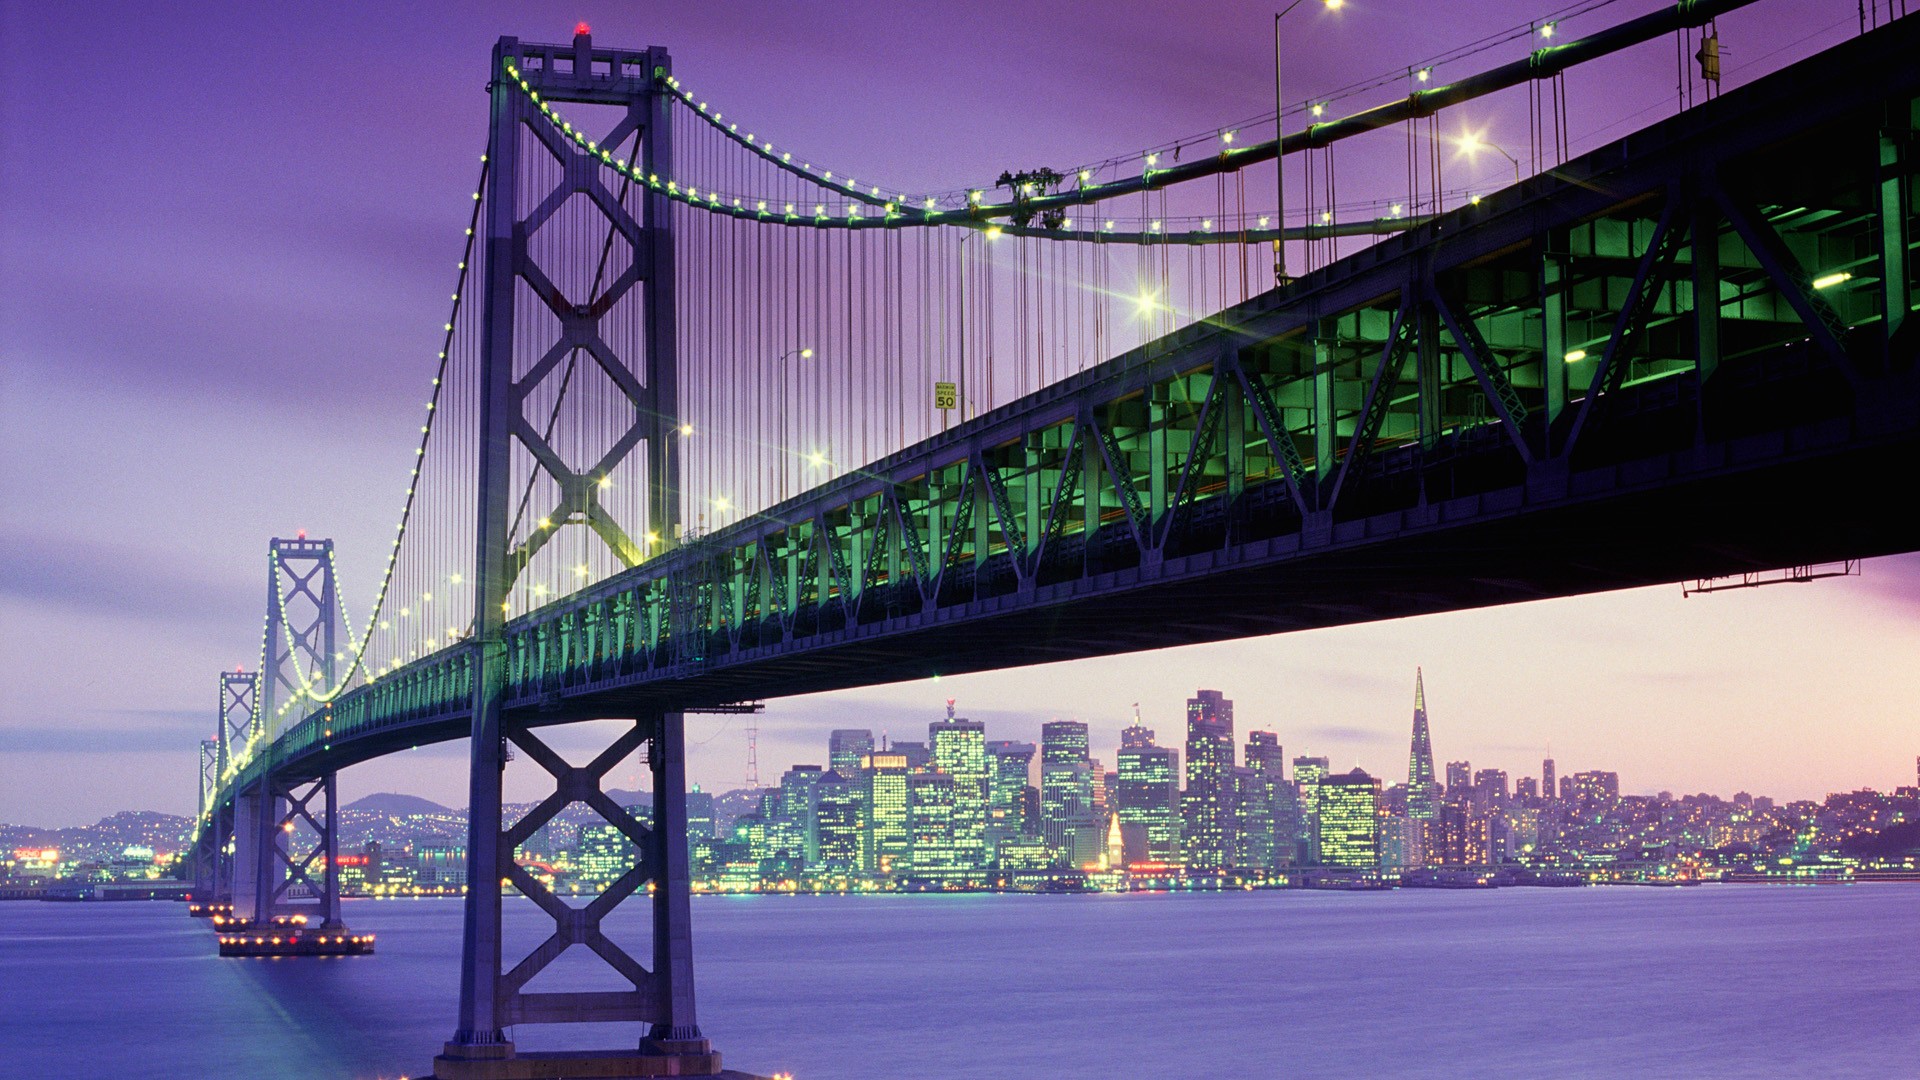 Wallpapers collections. Бруклинский мост Сан Франциско. Мост Лос Анджелес. Мост Сан Франциско Окленд ночной. Заставка на рабочий стол мост.